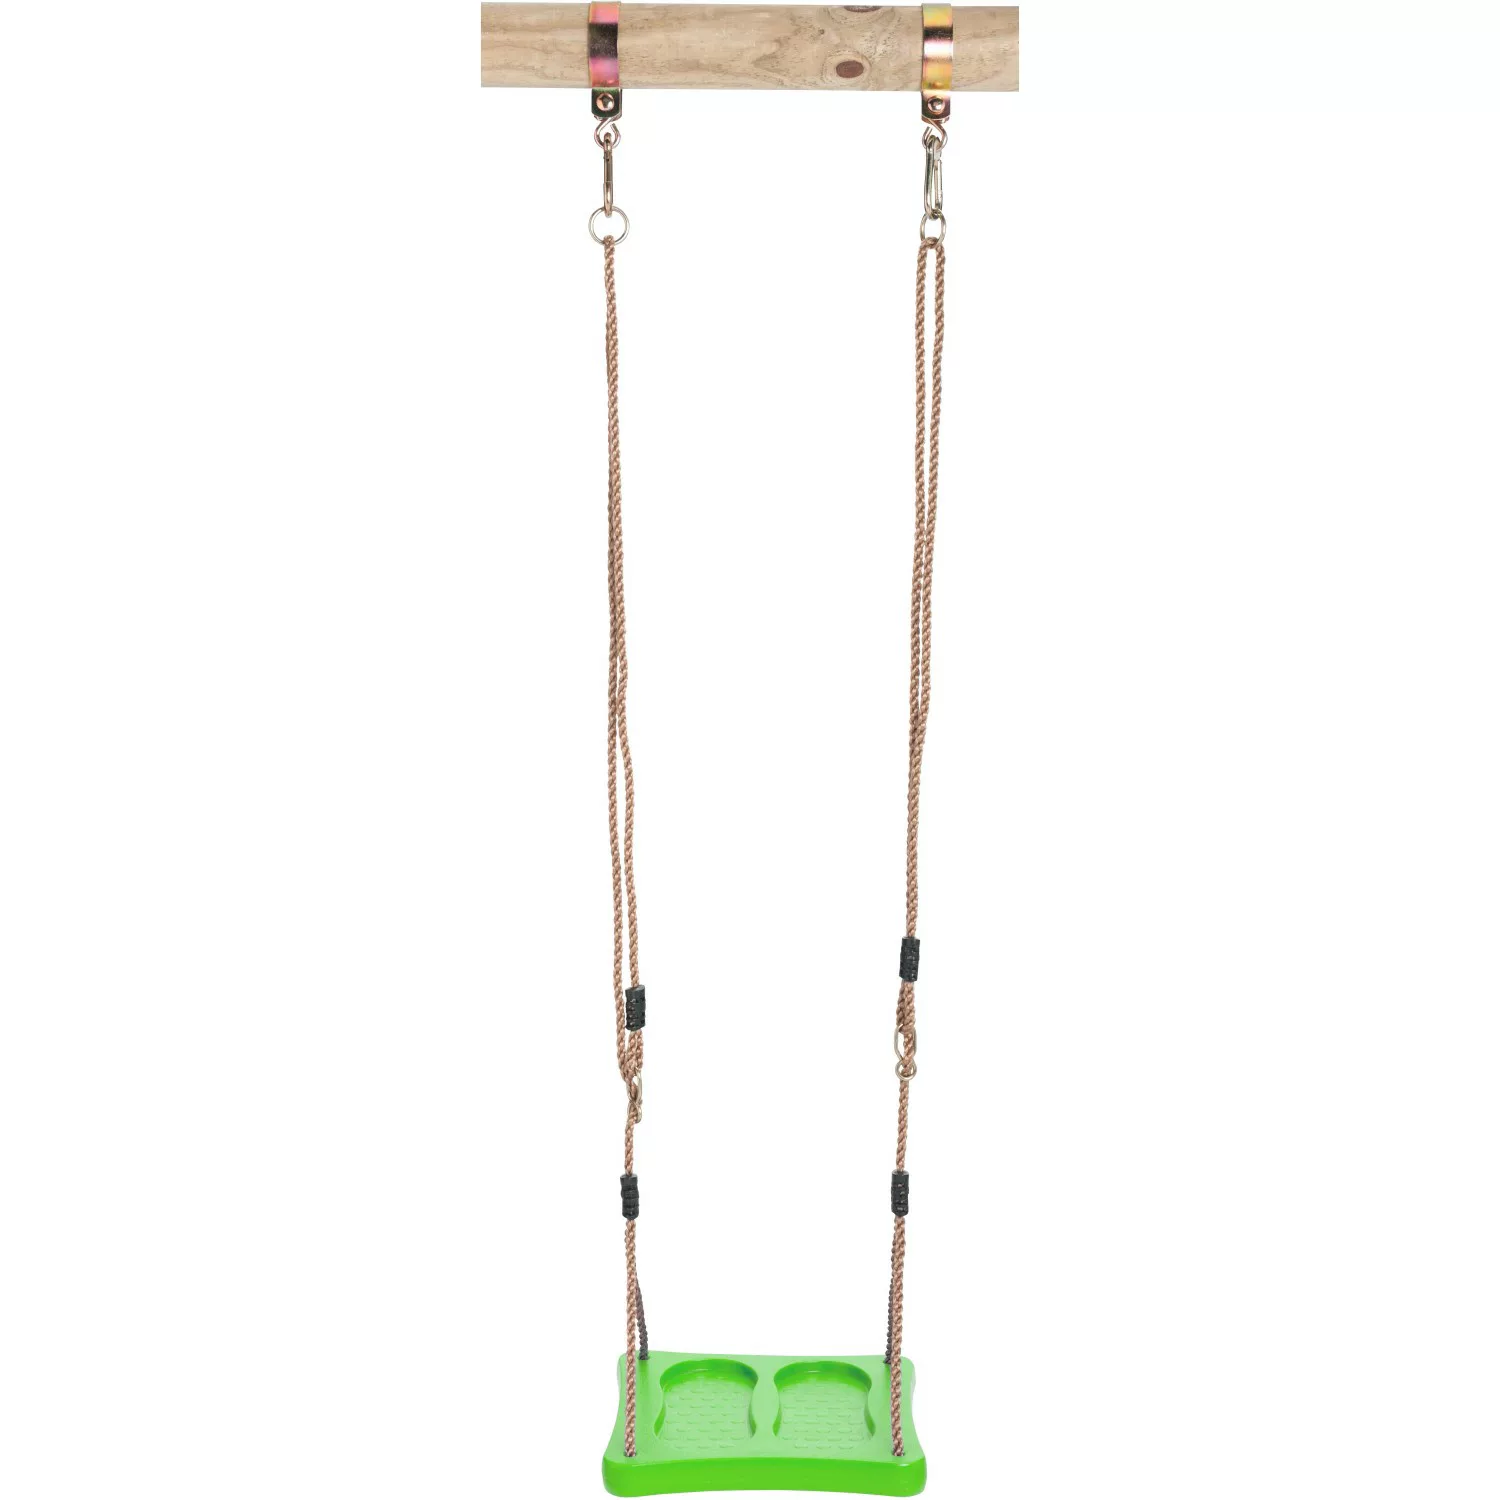 SwingKing Schaukelbrett Fußschaukel Grün 36 cm x 36 cm x 8 cm günstig online kaufen